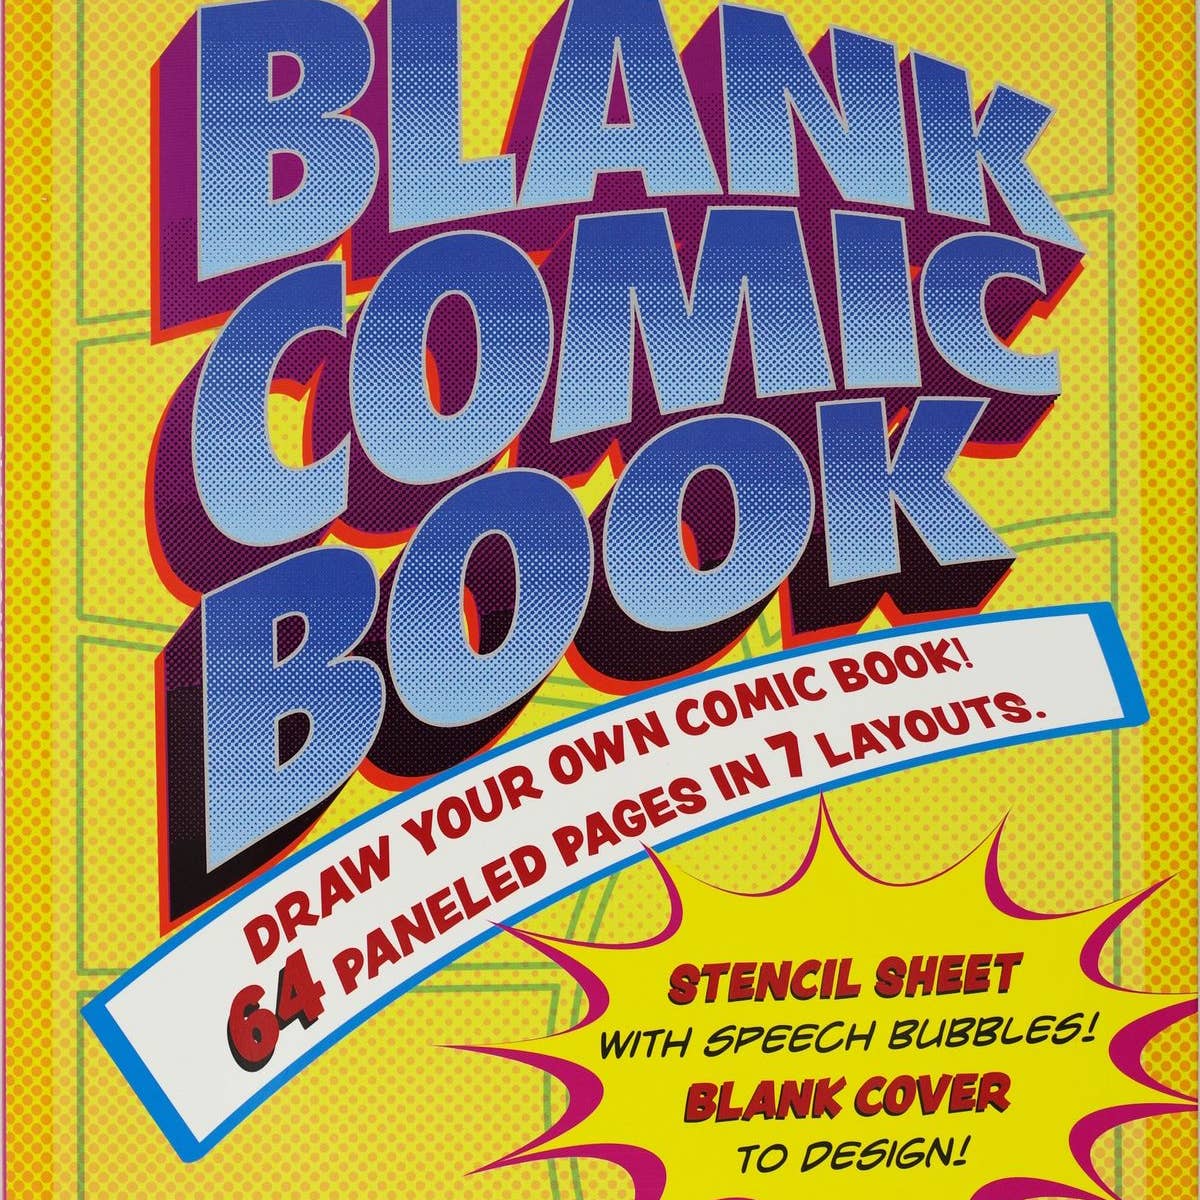 Blank Comic Book (Stencil included)